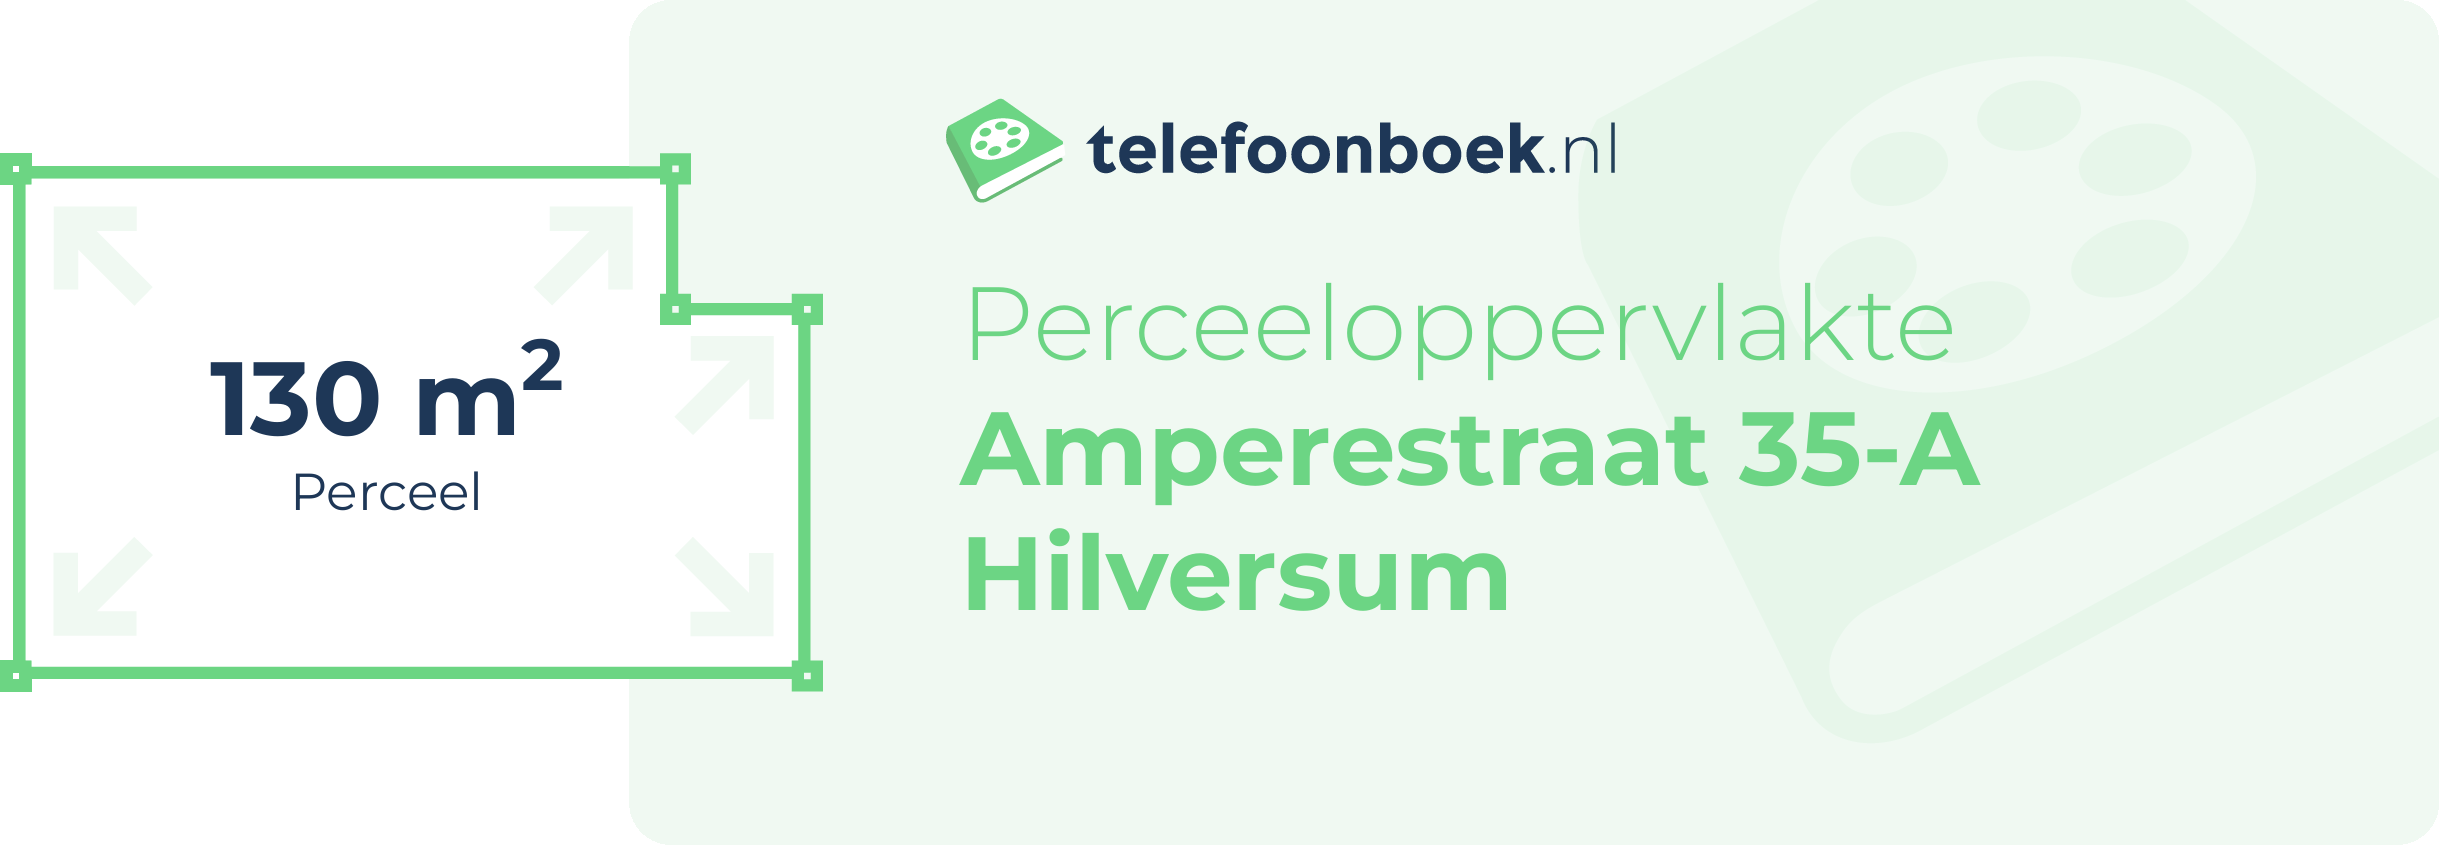 Perceeloppervlakte Amperestraat 35-A Hilversum